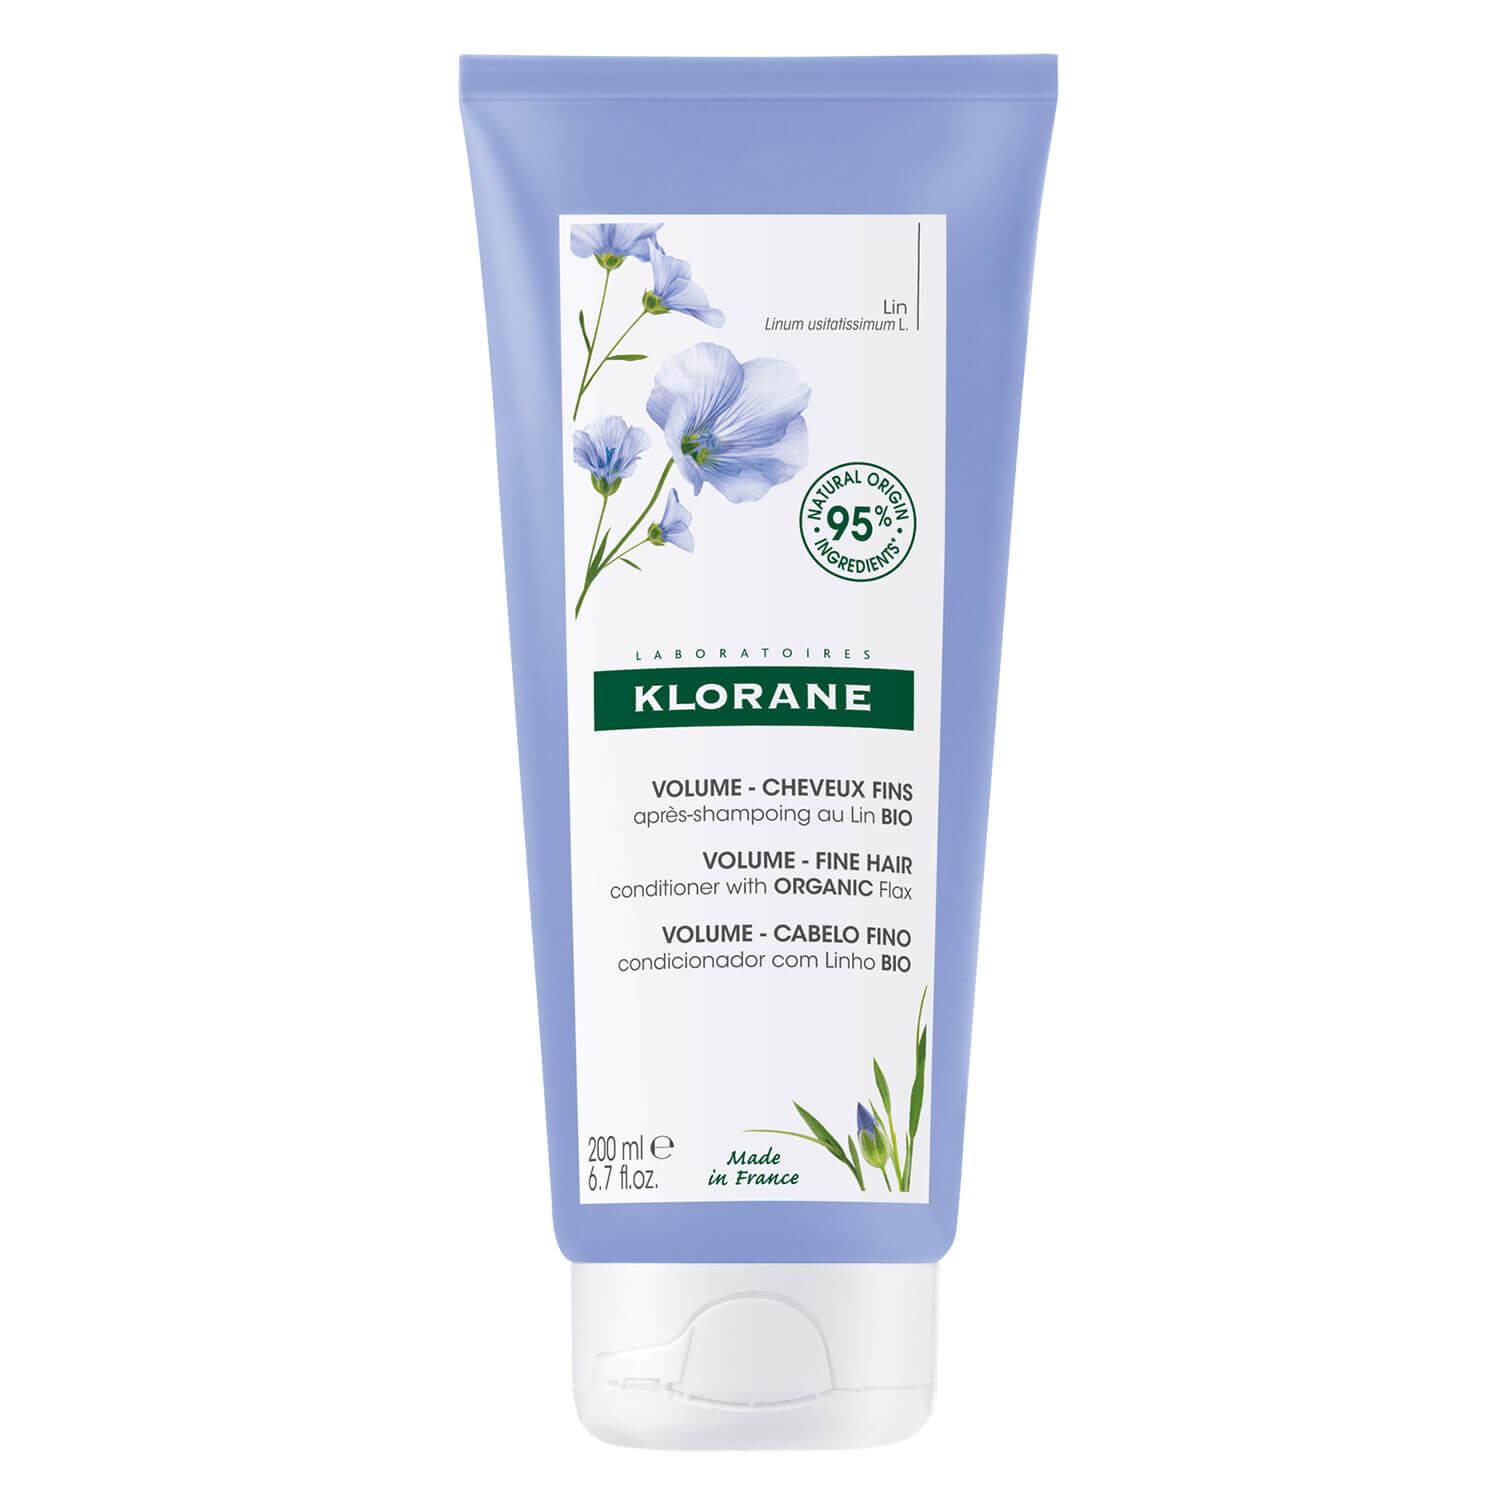 KLORANE Hair - Volume Conditioner Flax Fiber